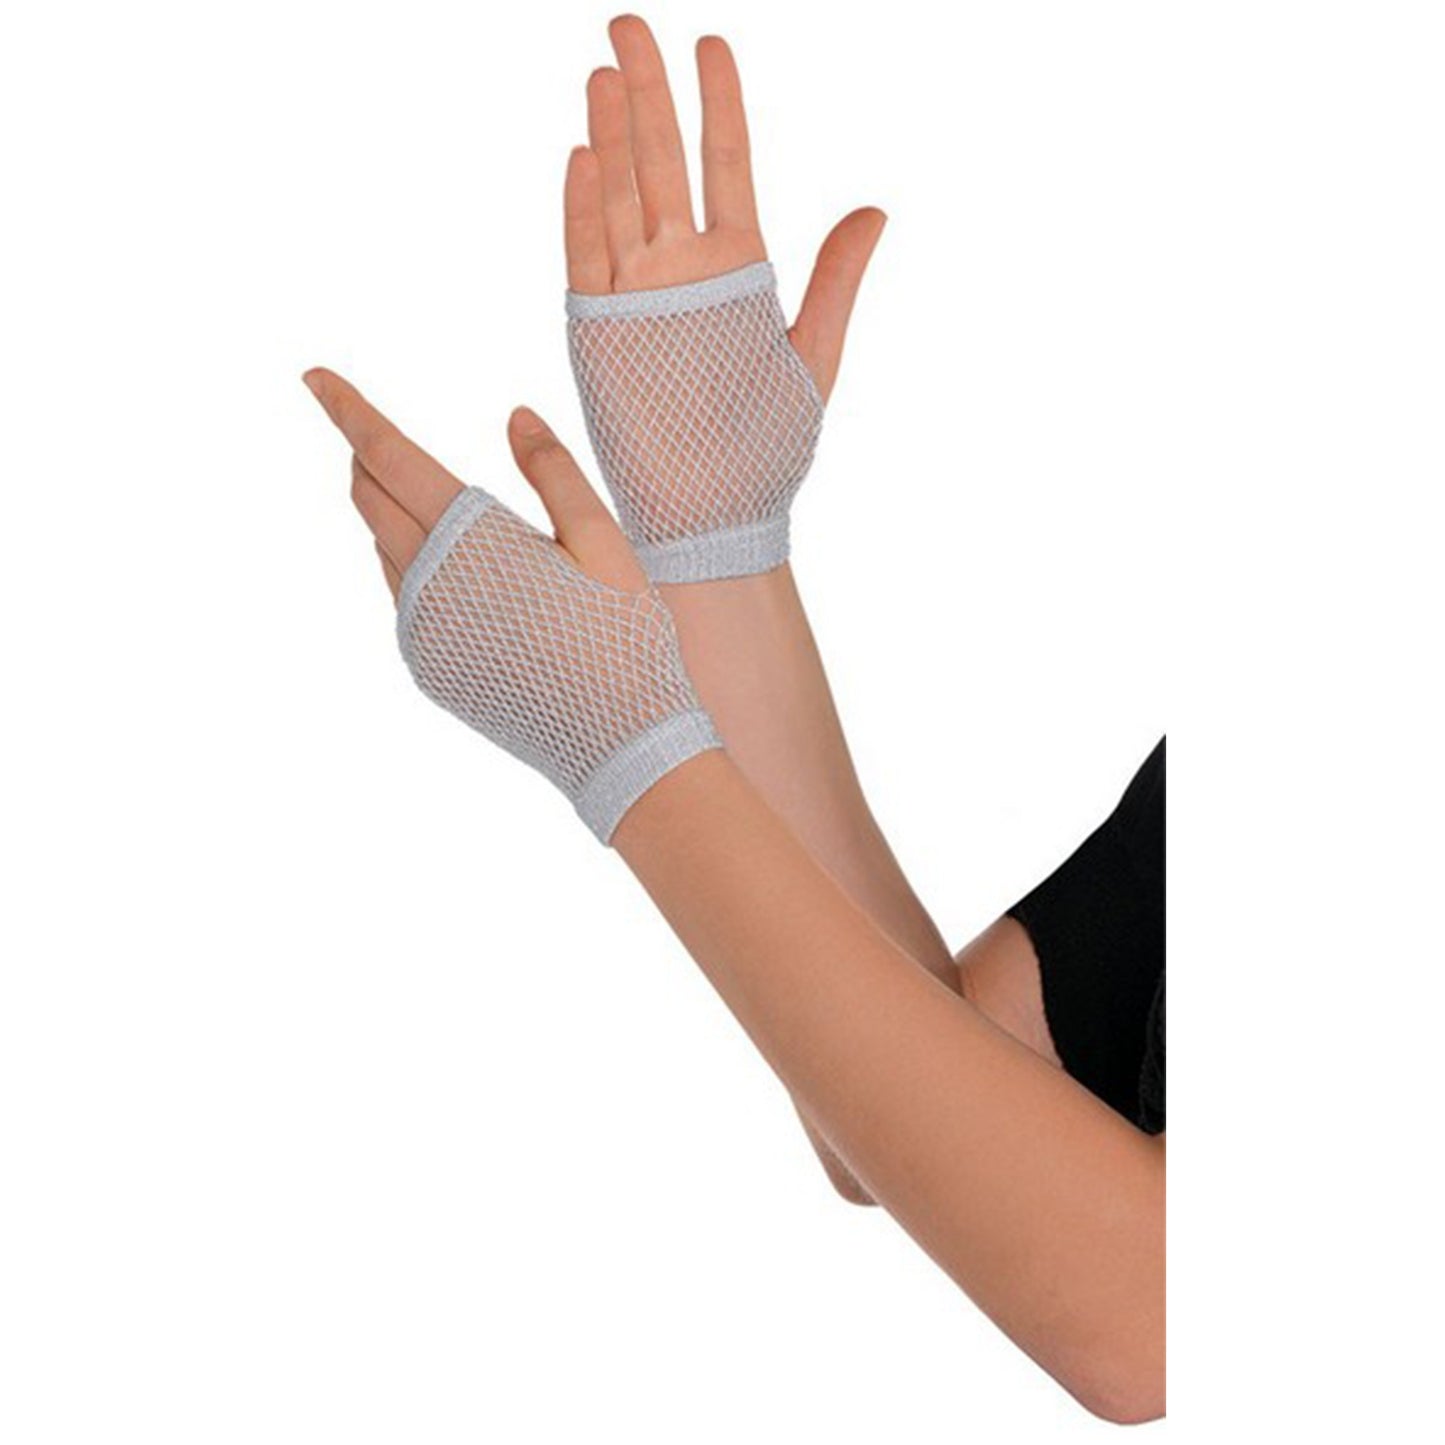 Fishnet Gloves Short - Silver